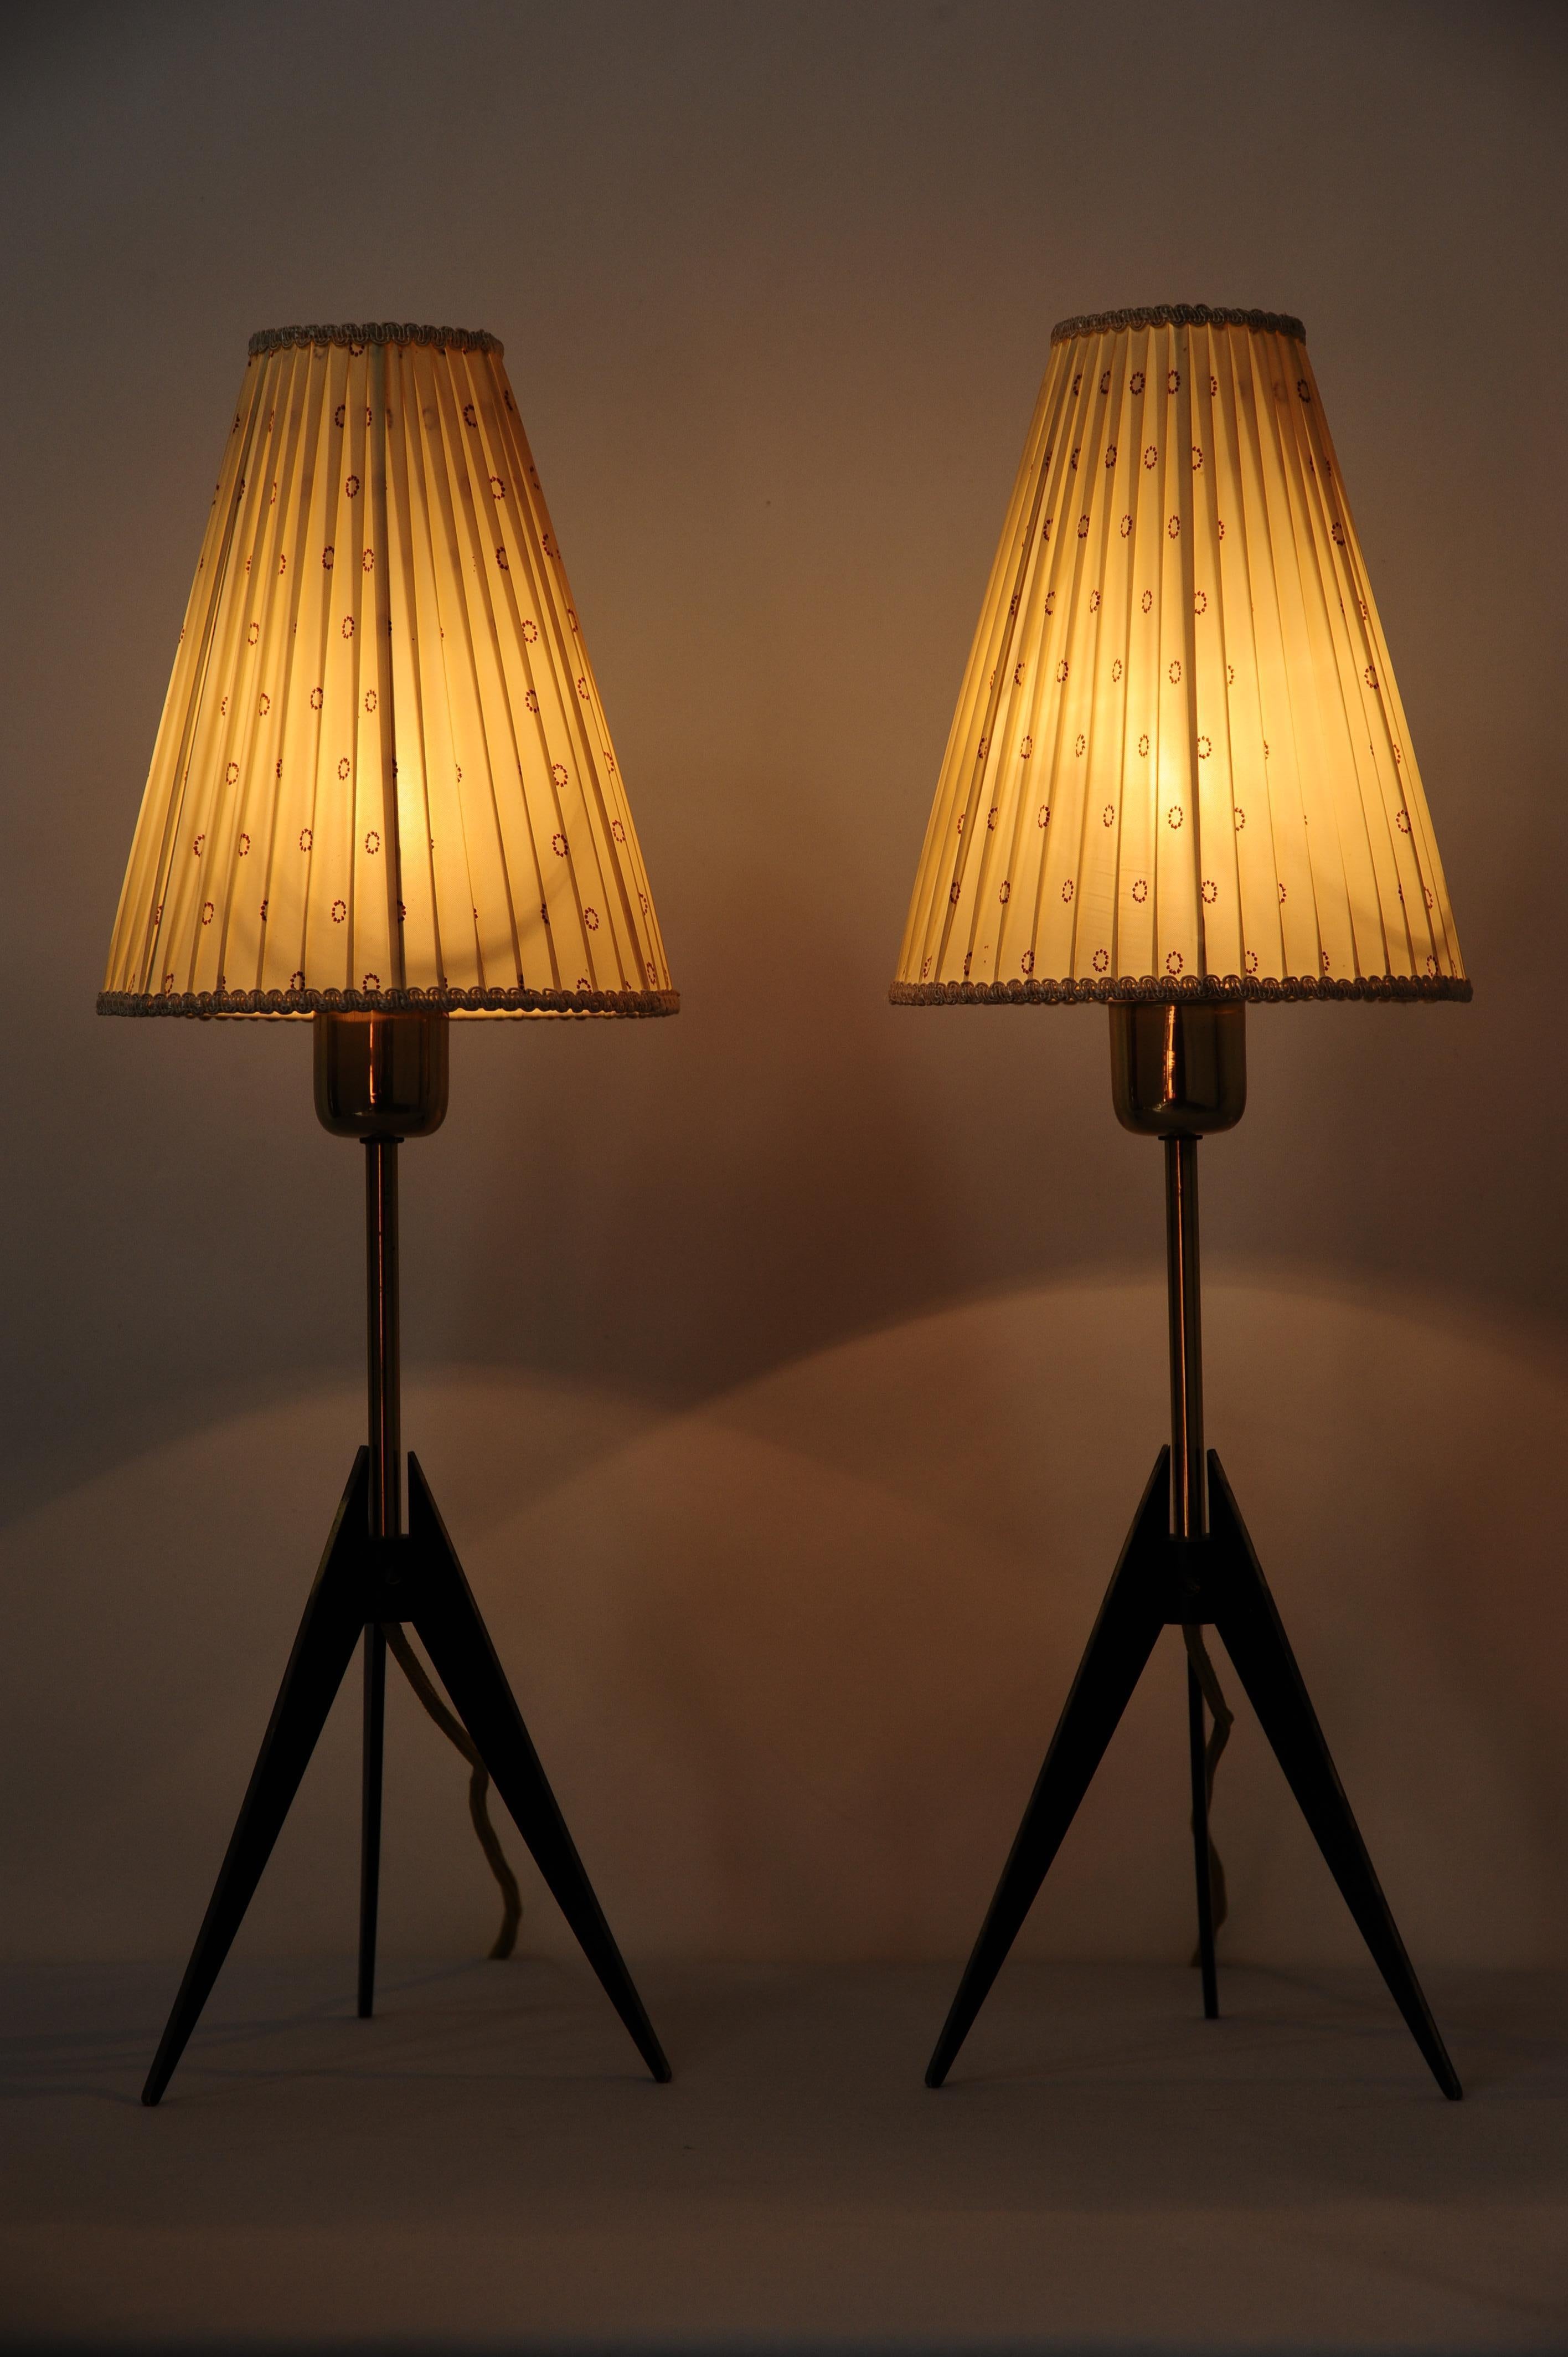 Two Kalmar table lamps, circa 1950s
Original condition
Original shades.